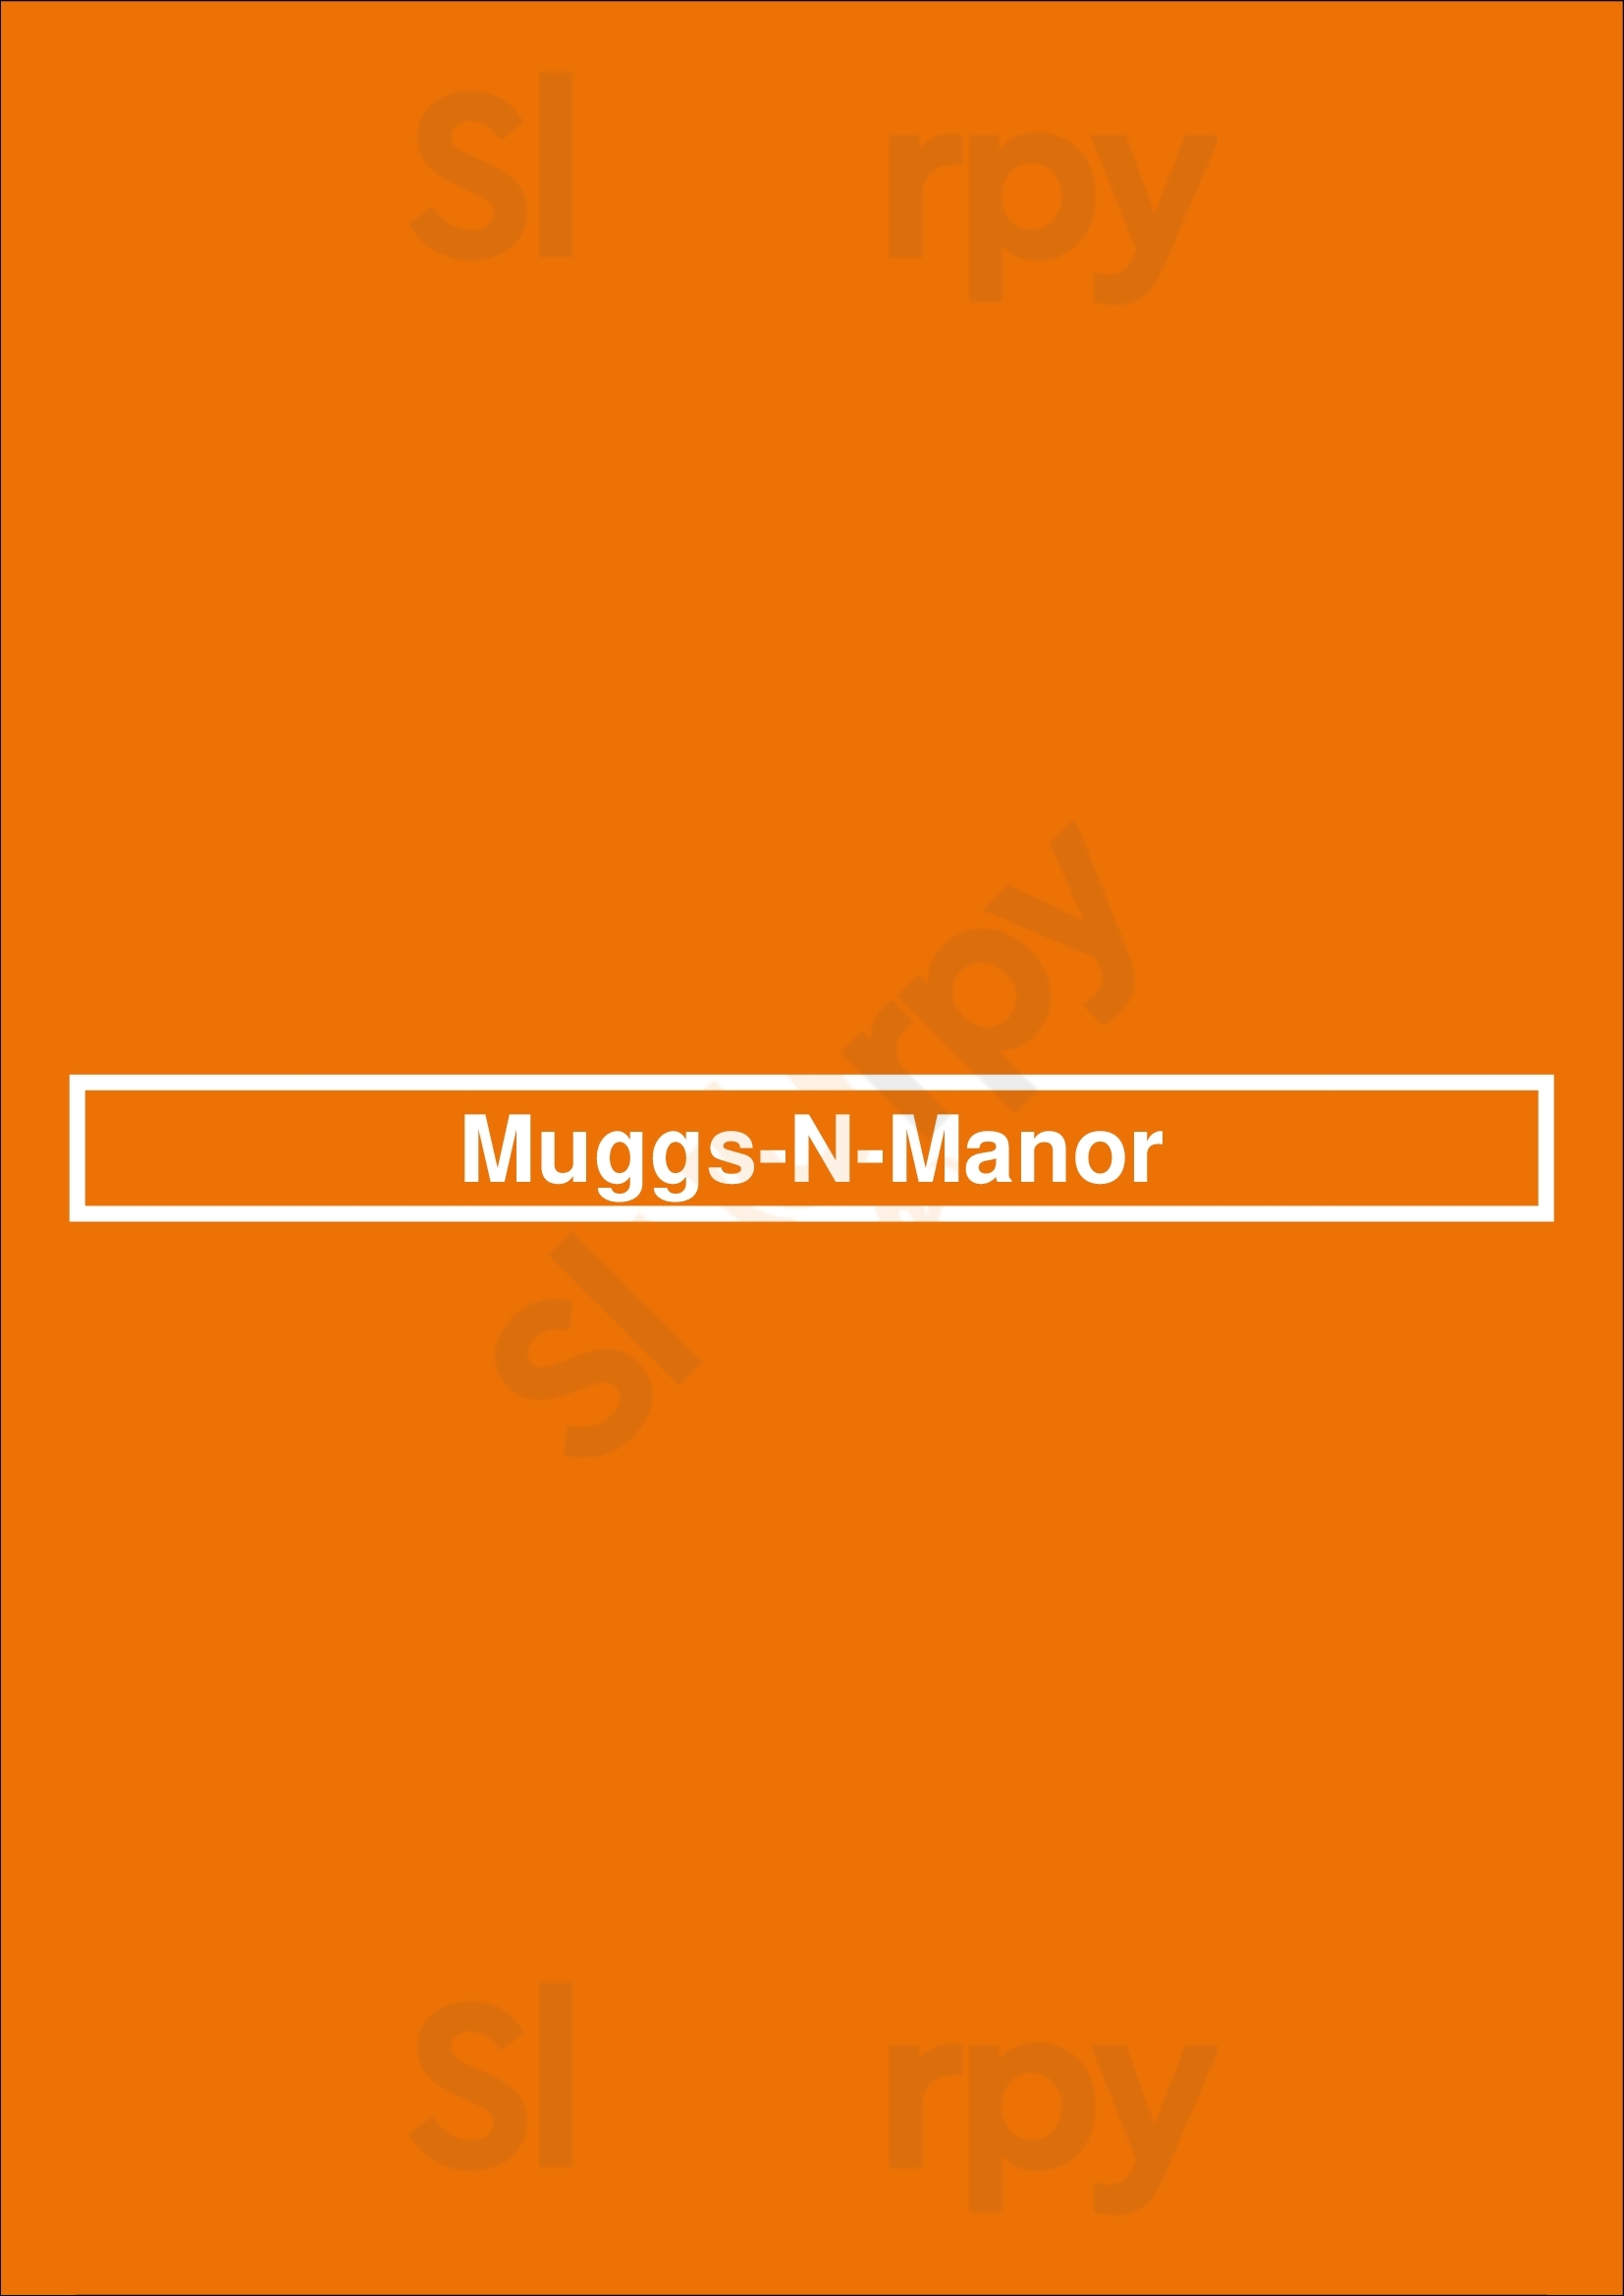 Muggs-n-manor Addison Menu - 1